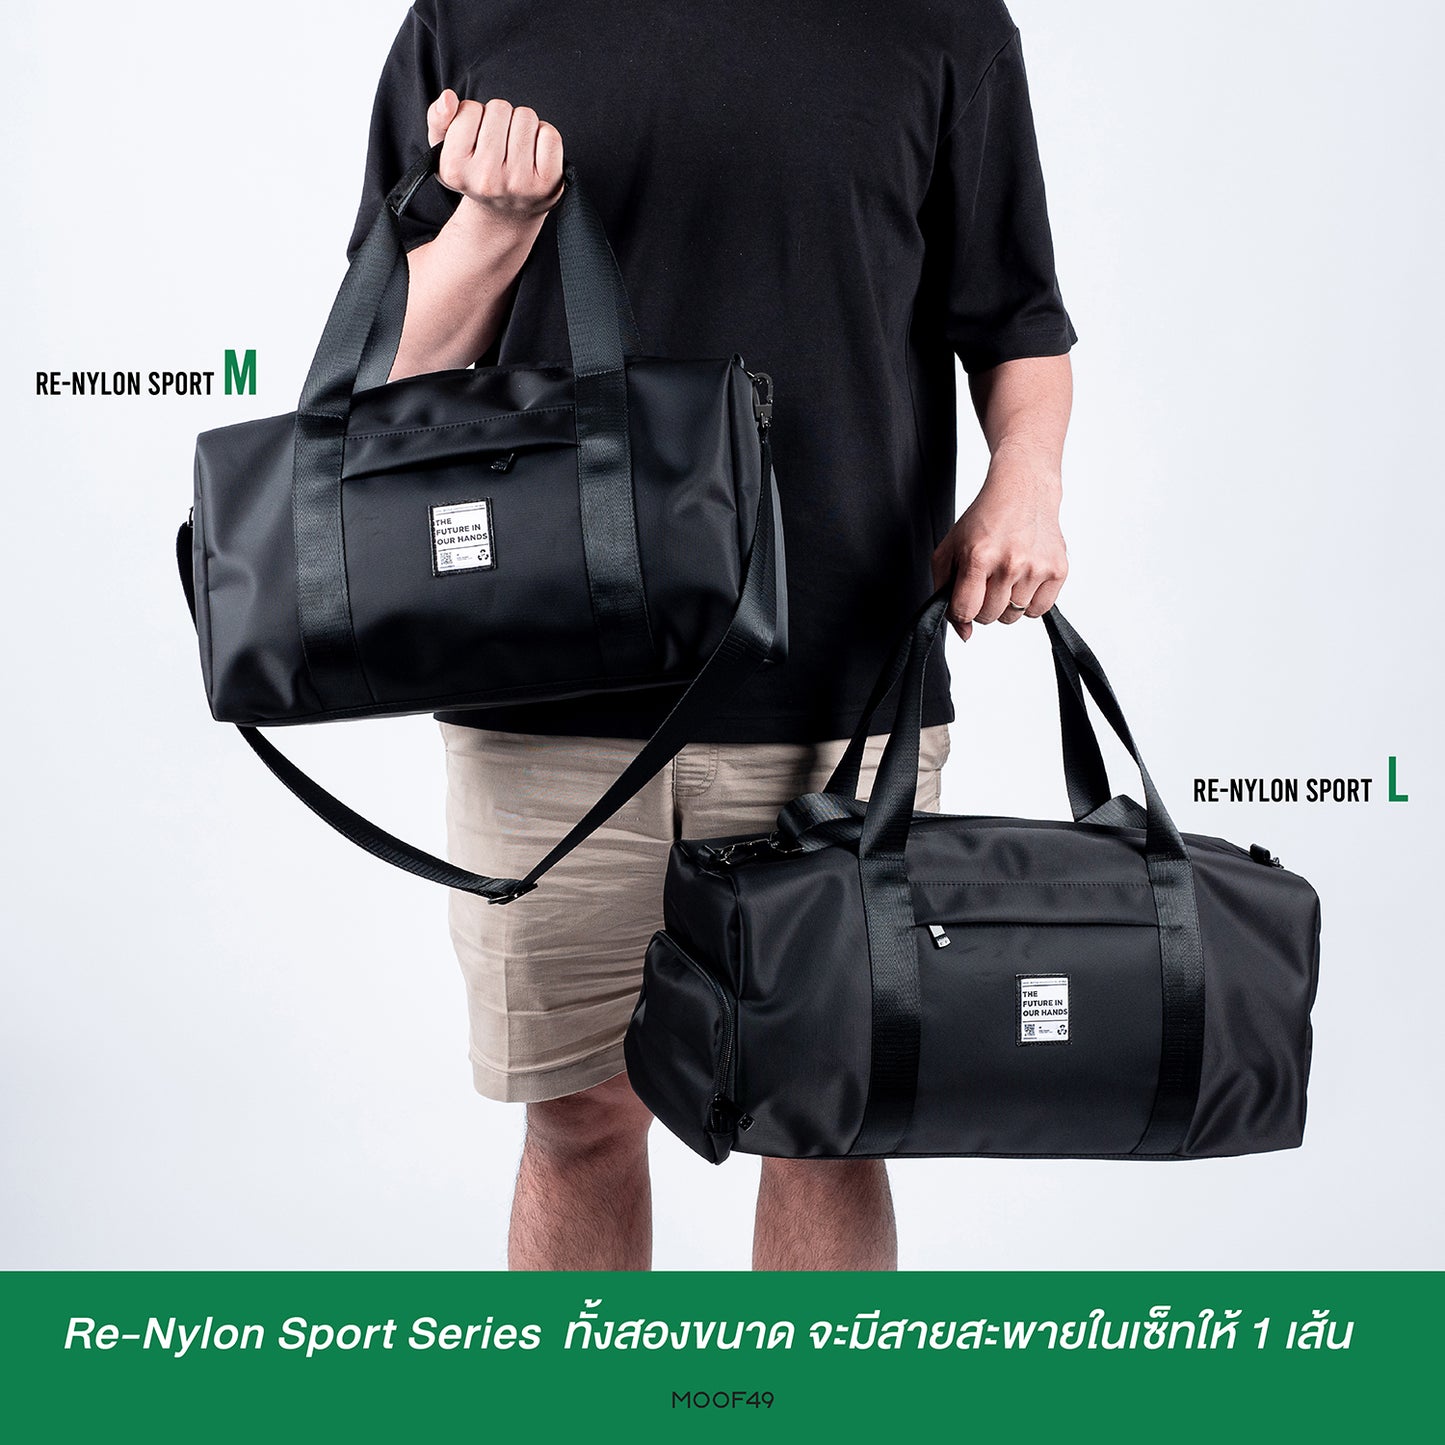 Re-Nylon Bag Sport L